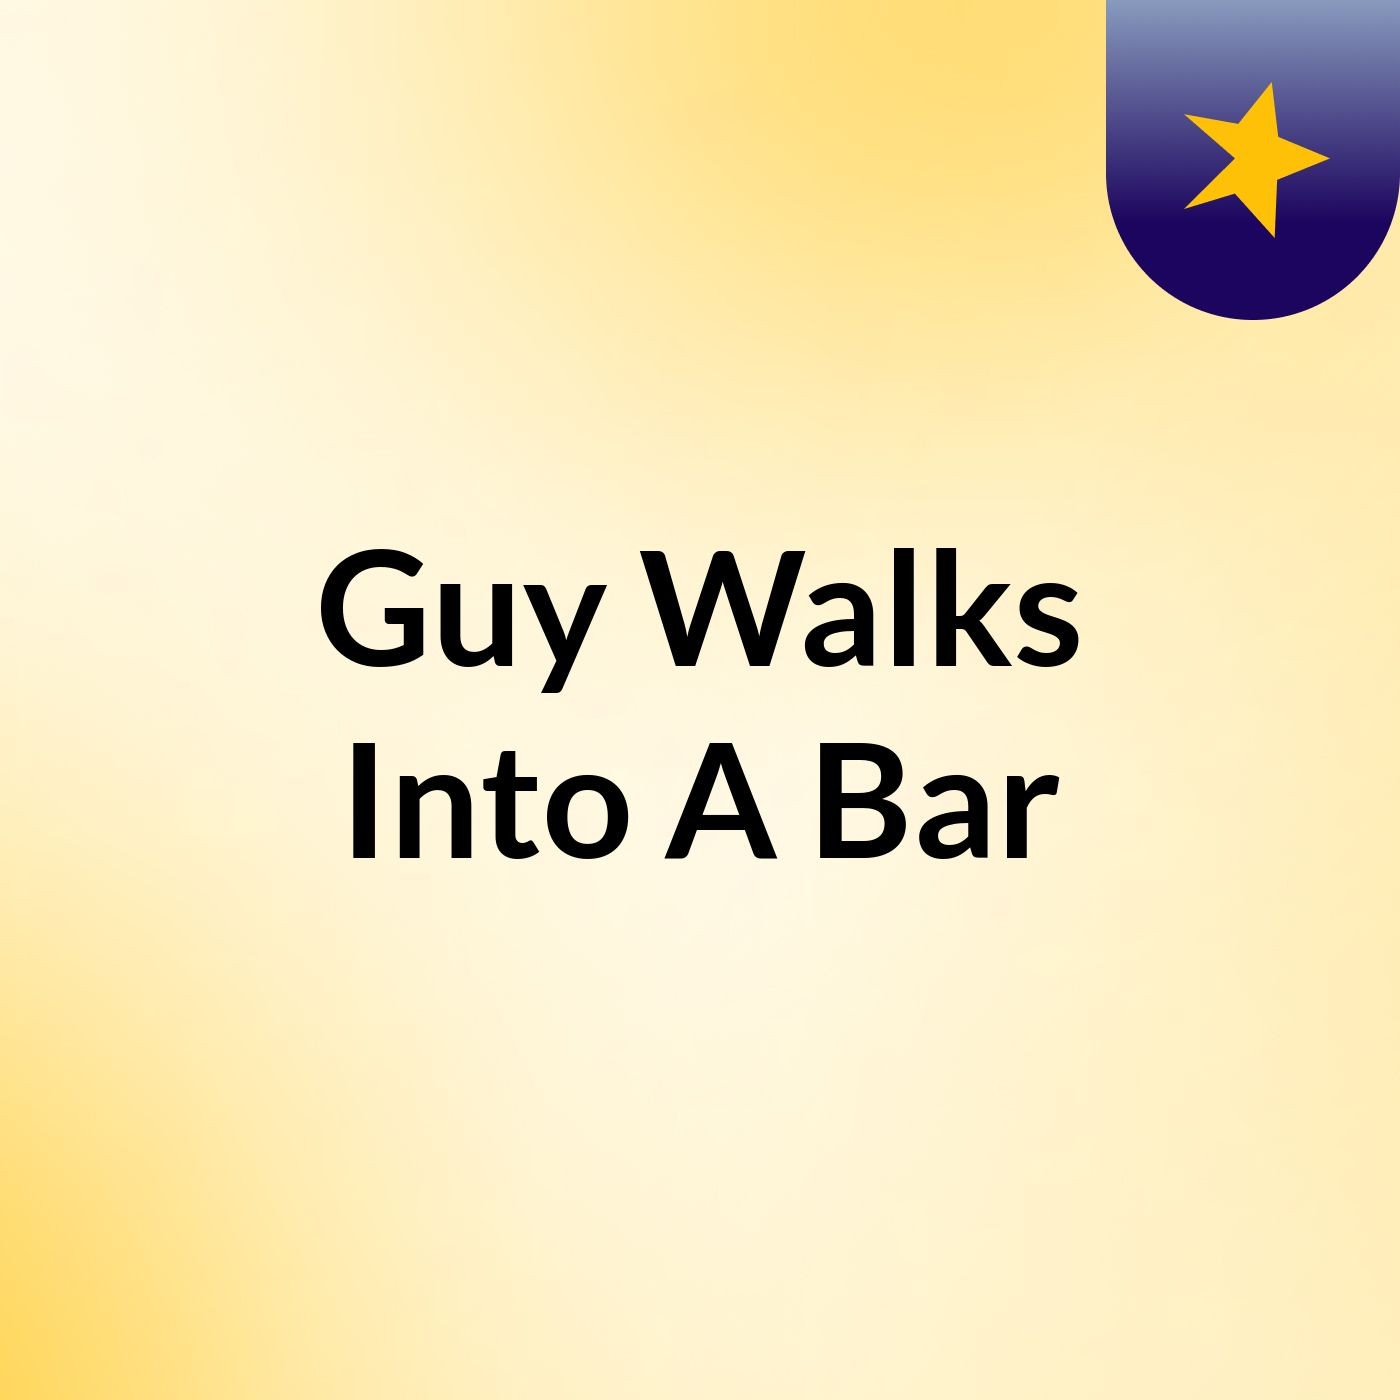 Guy Walks Into A Bar